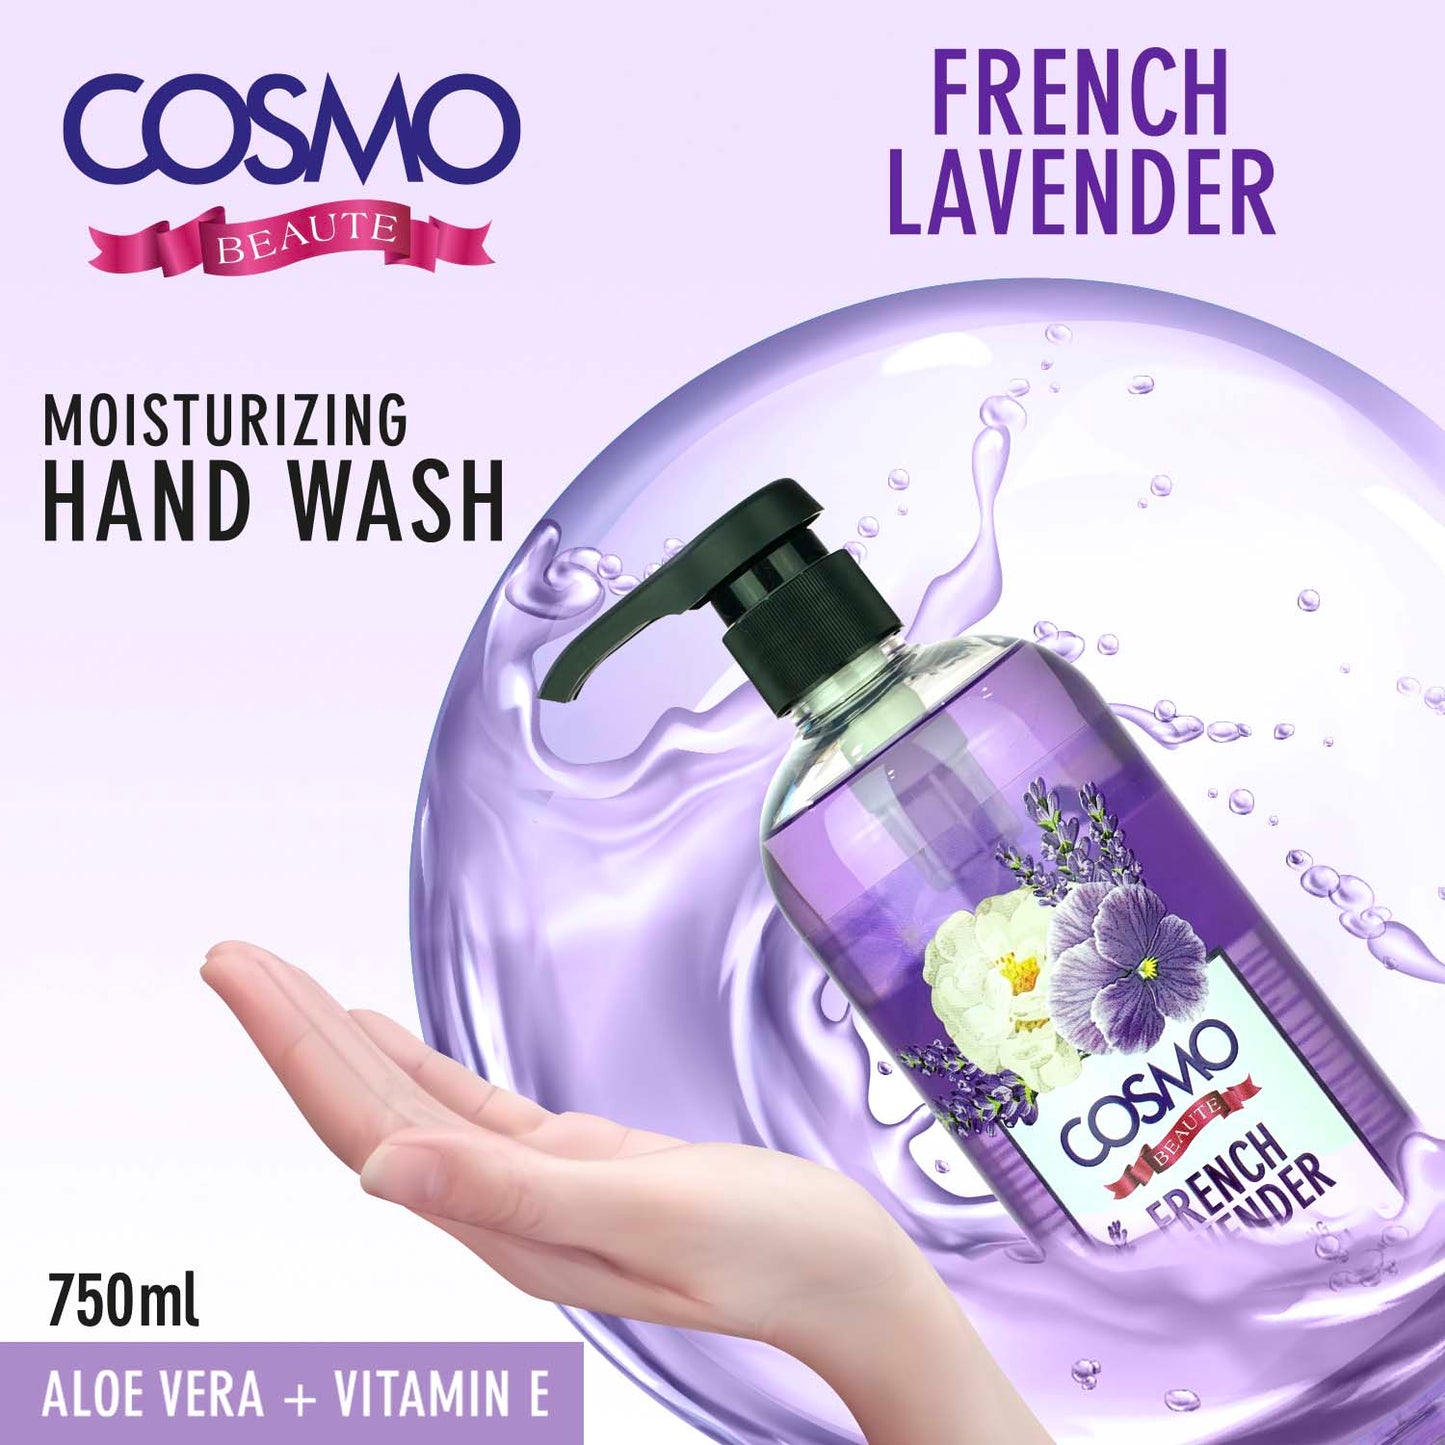 MOISTURIZING HAND WASH - FRENCH LAVENDER